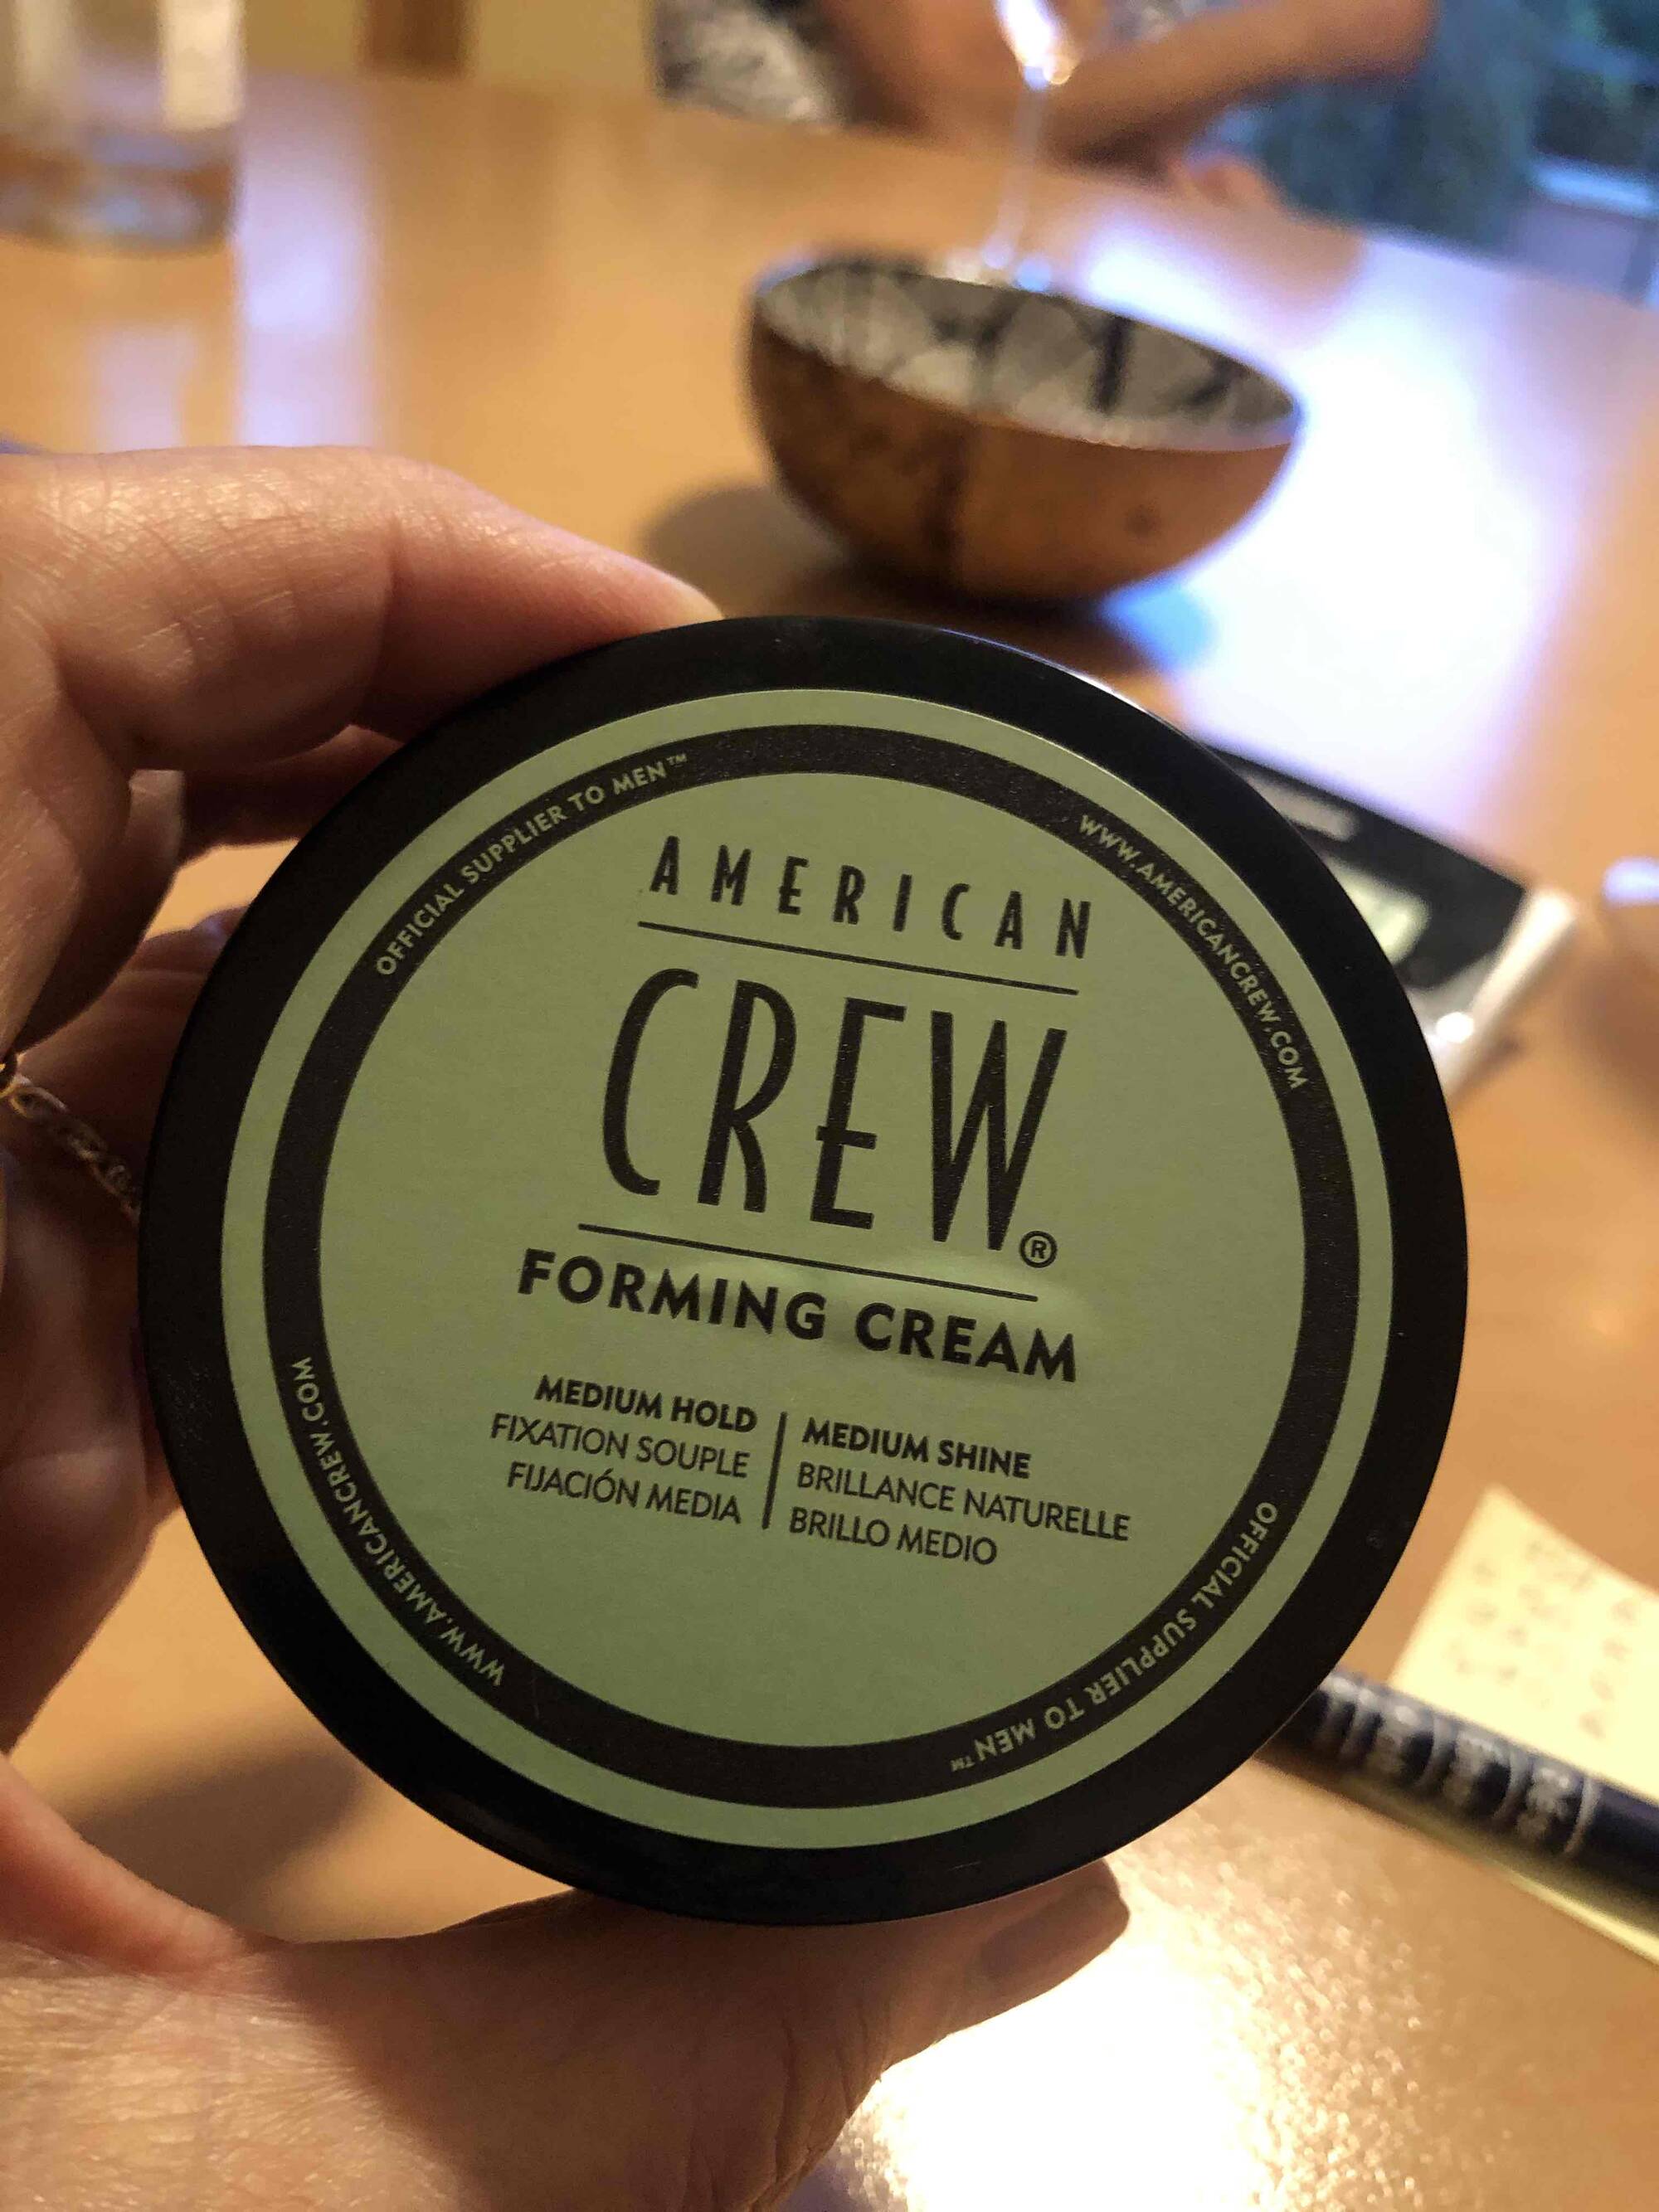 AMERICAN CREW - Forming cream